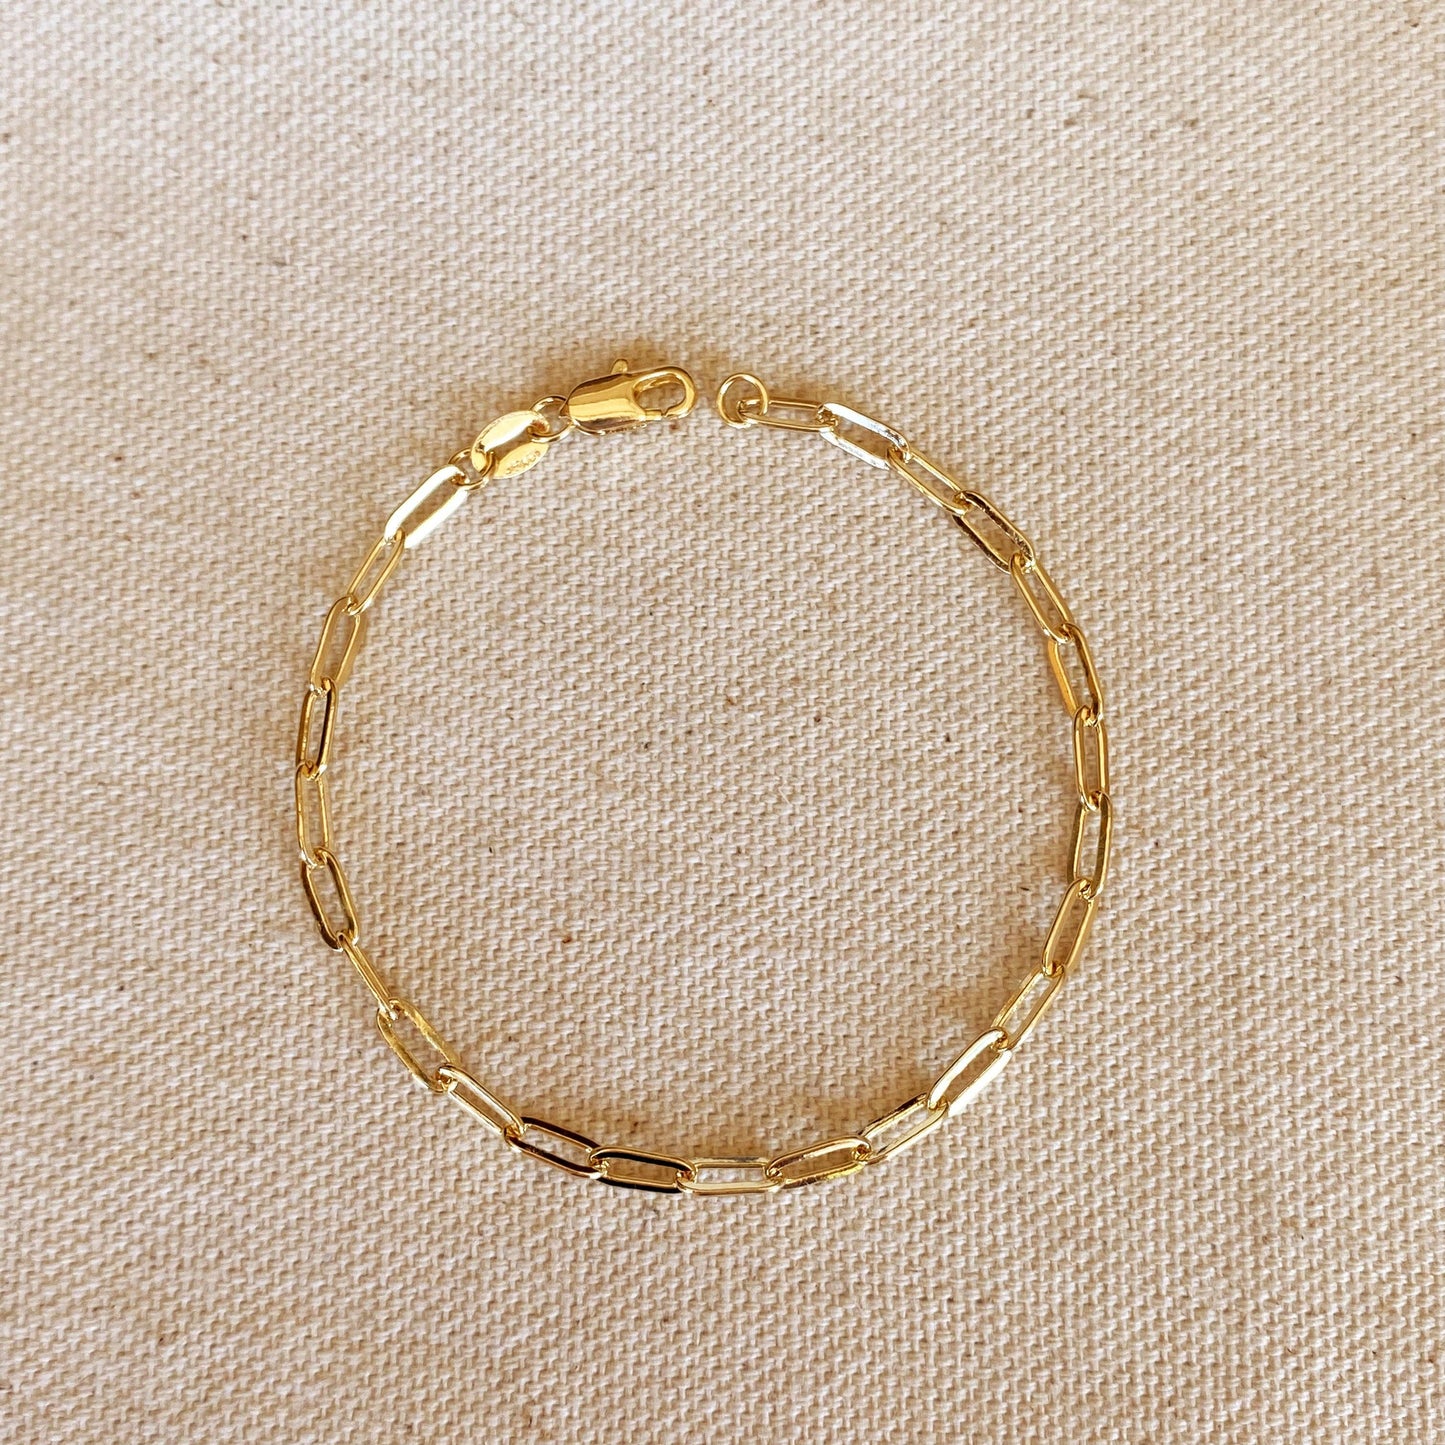 Jewelry, Paperclip Bracelet, Women's Jewelry, Gold Jewelry, 18k Gold Filled Short LInk Paperclip Bracelet